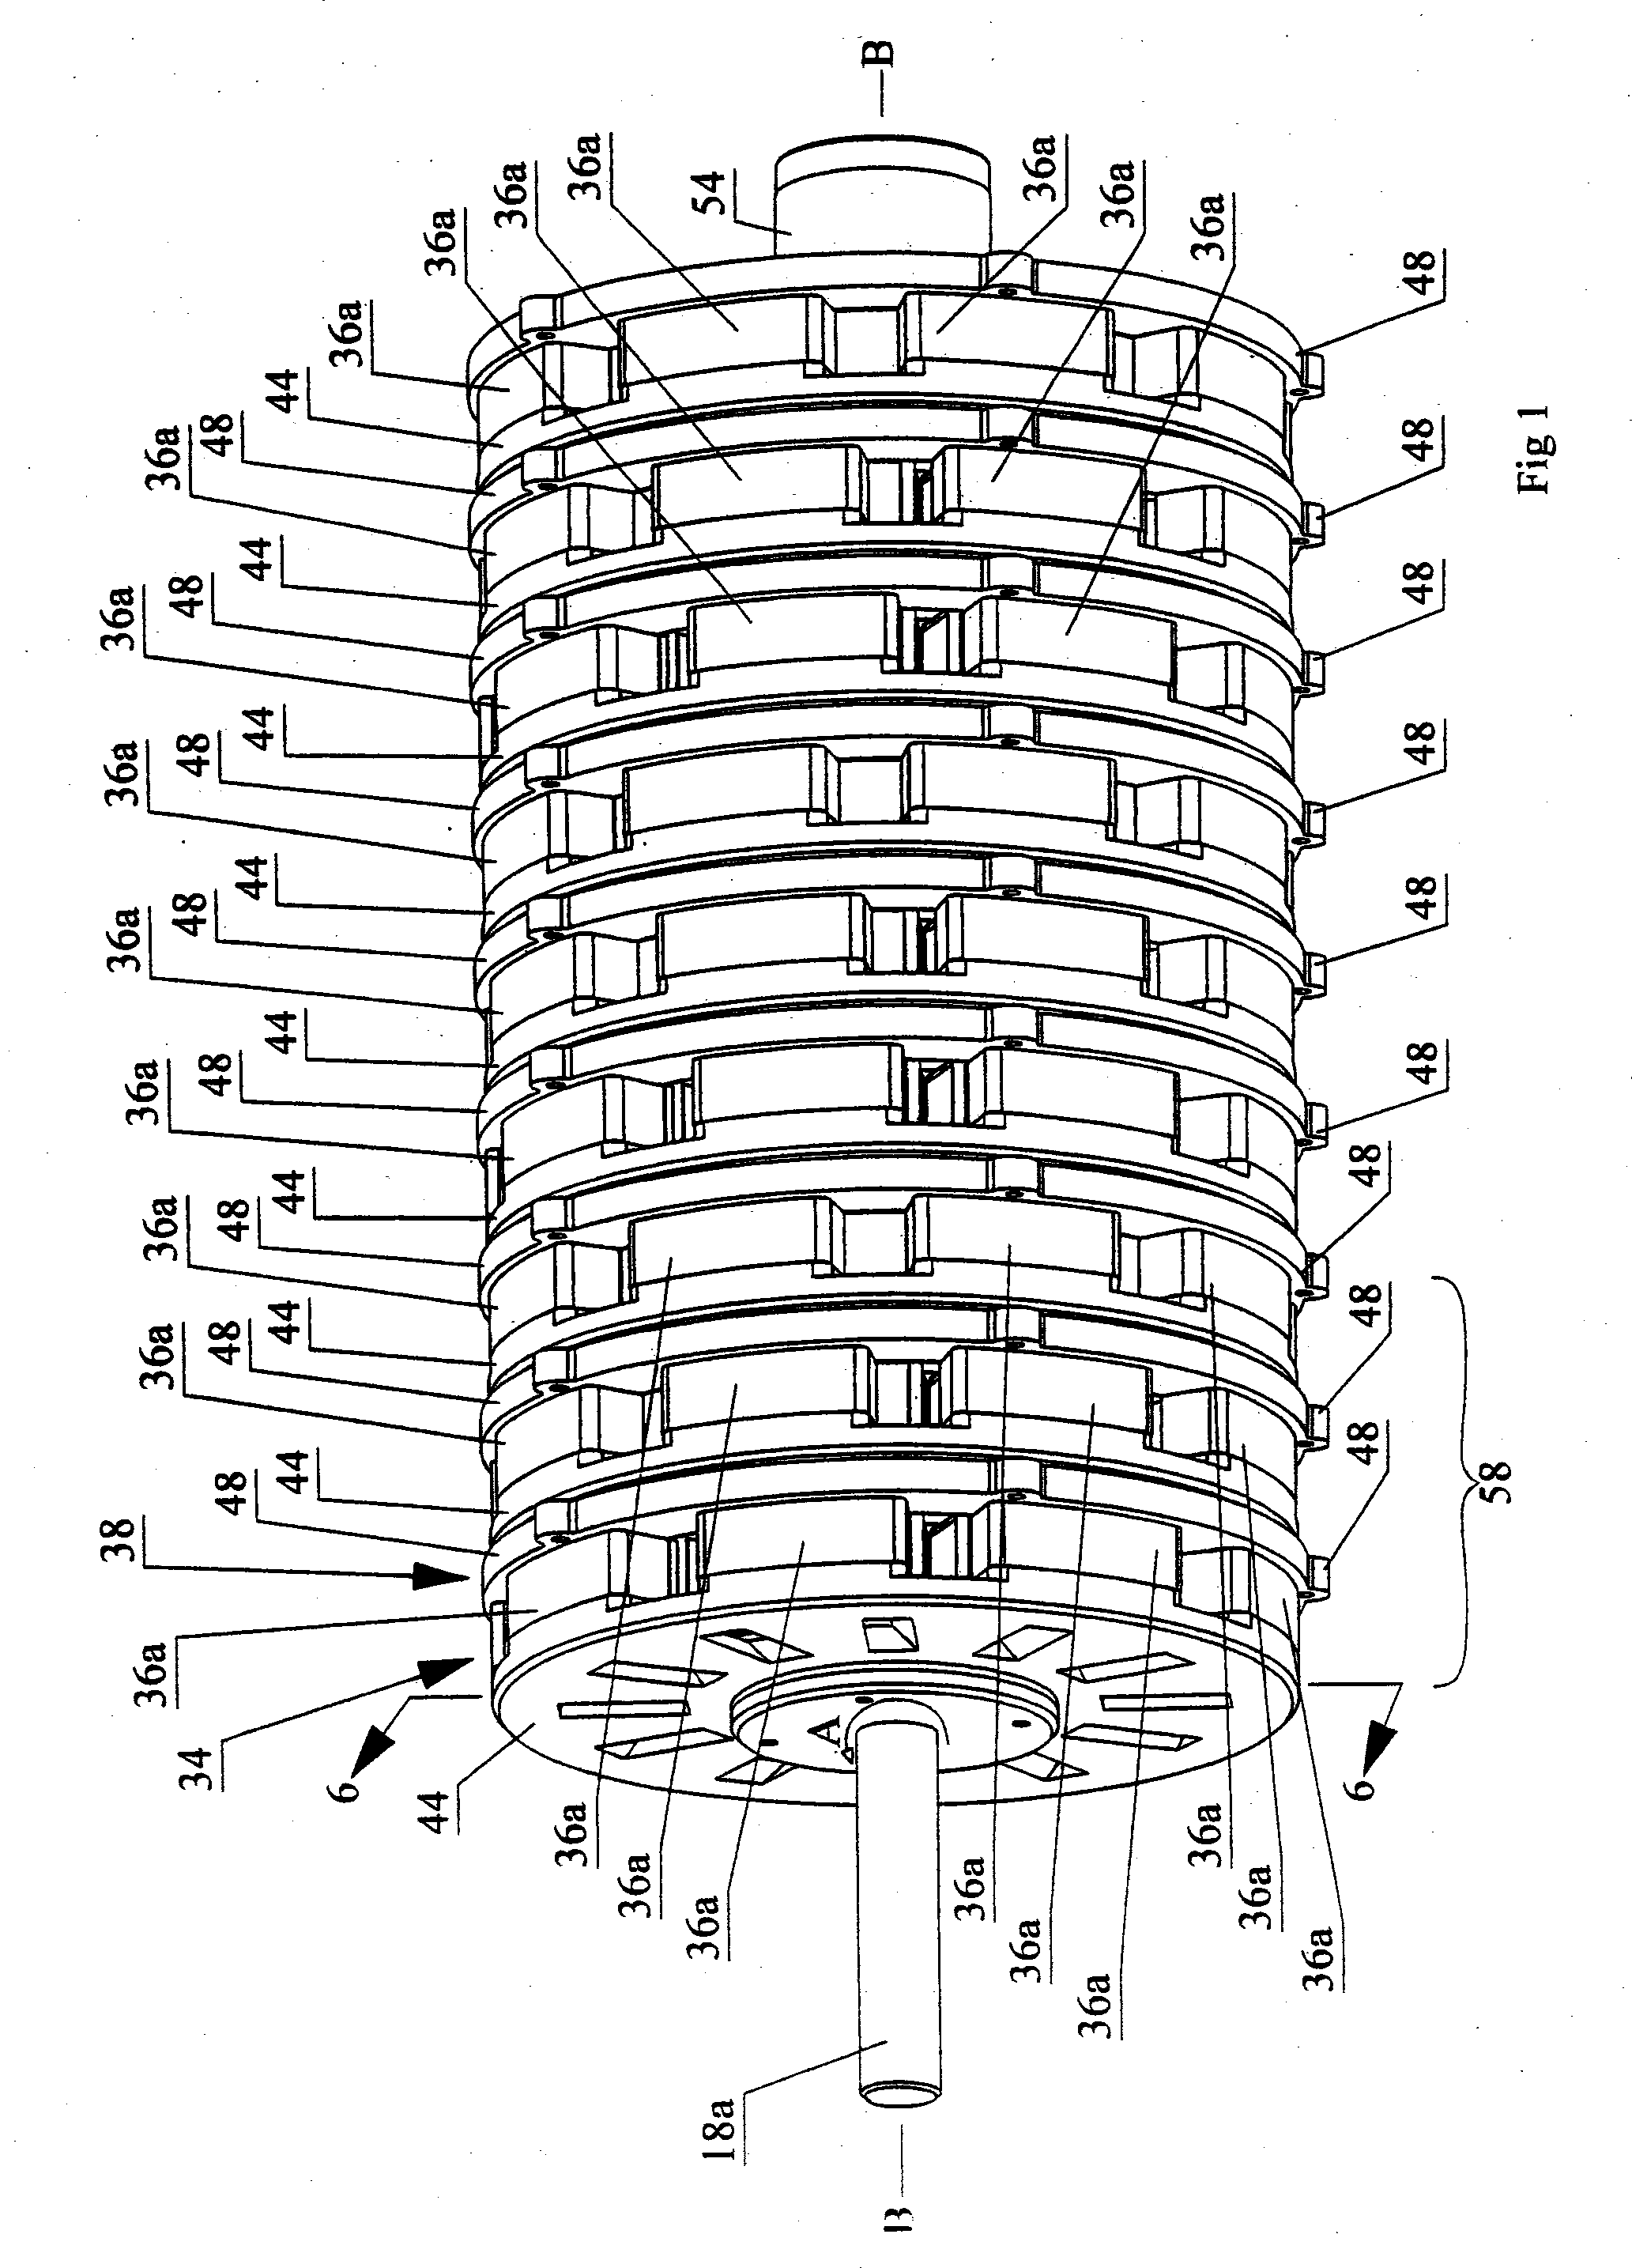 Poly-phasic multi-coil generator